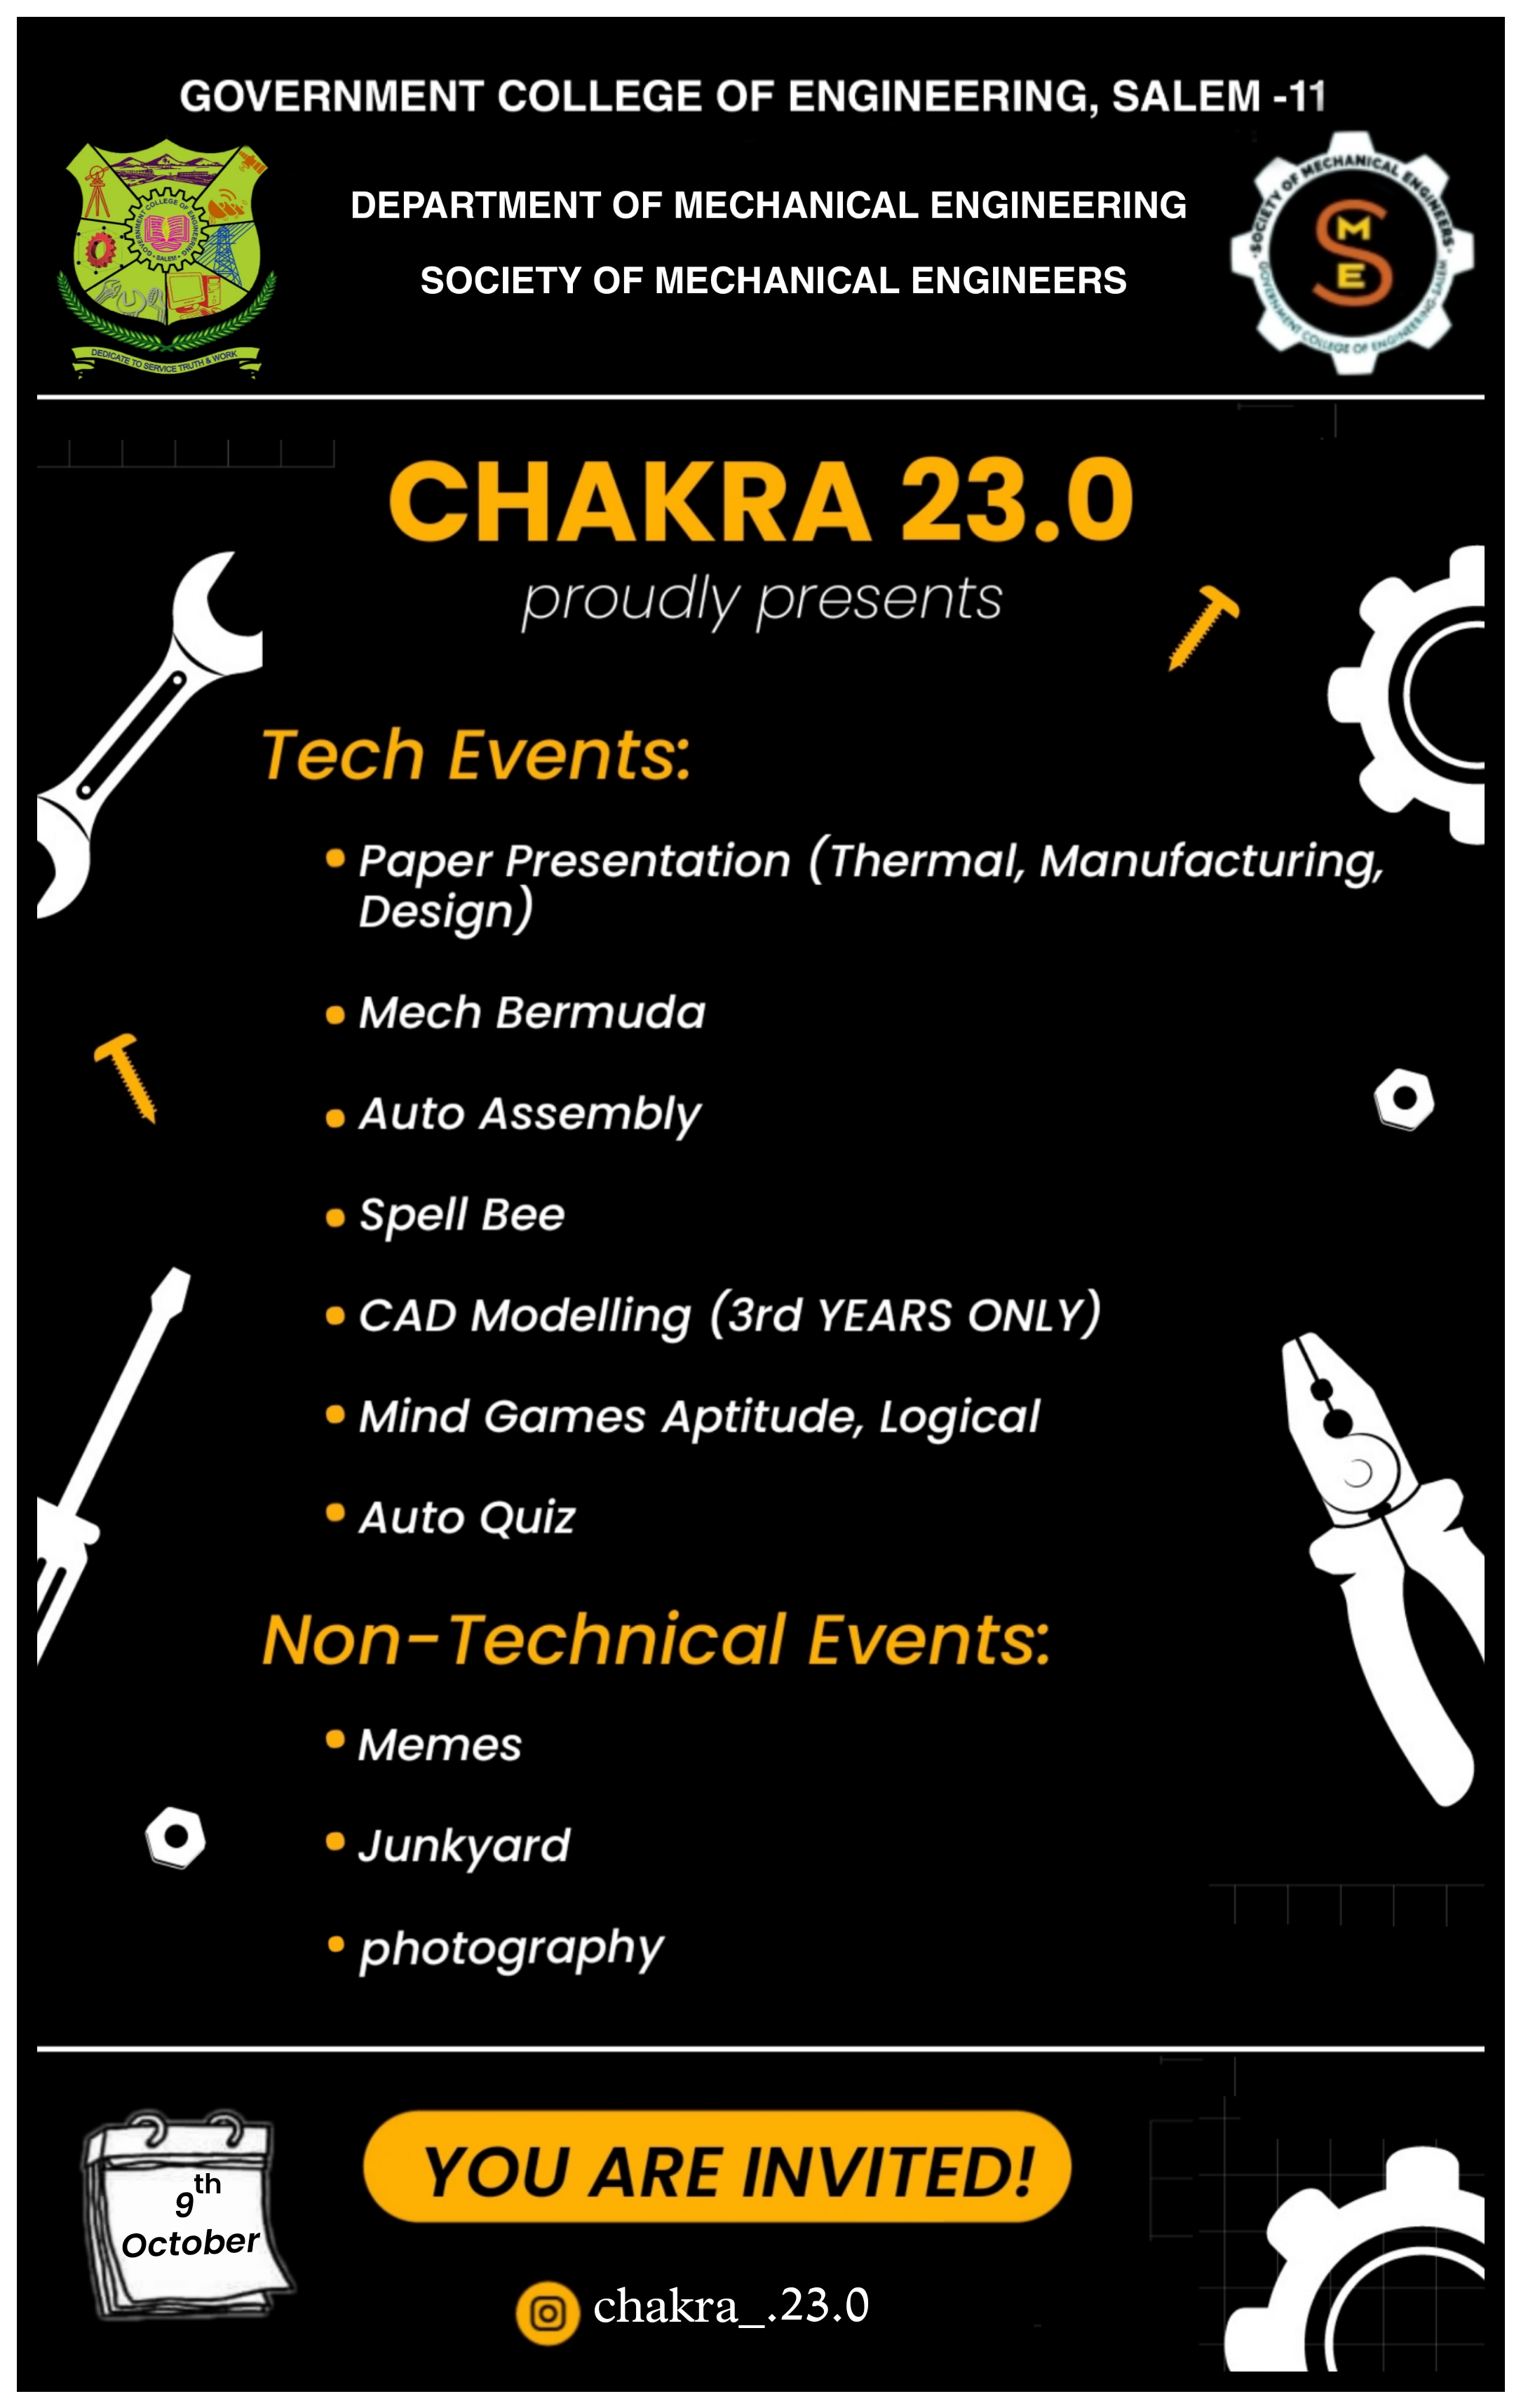 CHAKRA EVENTS